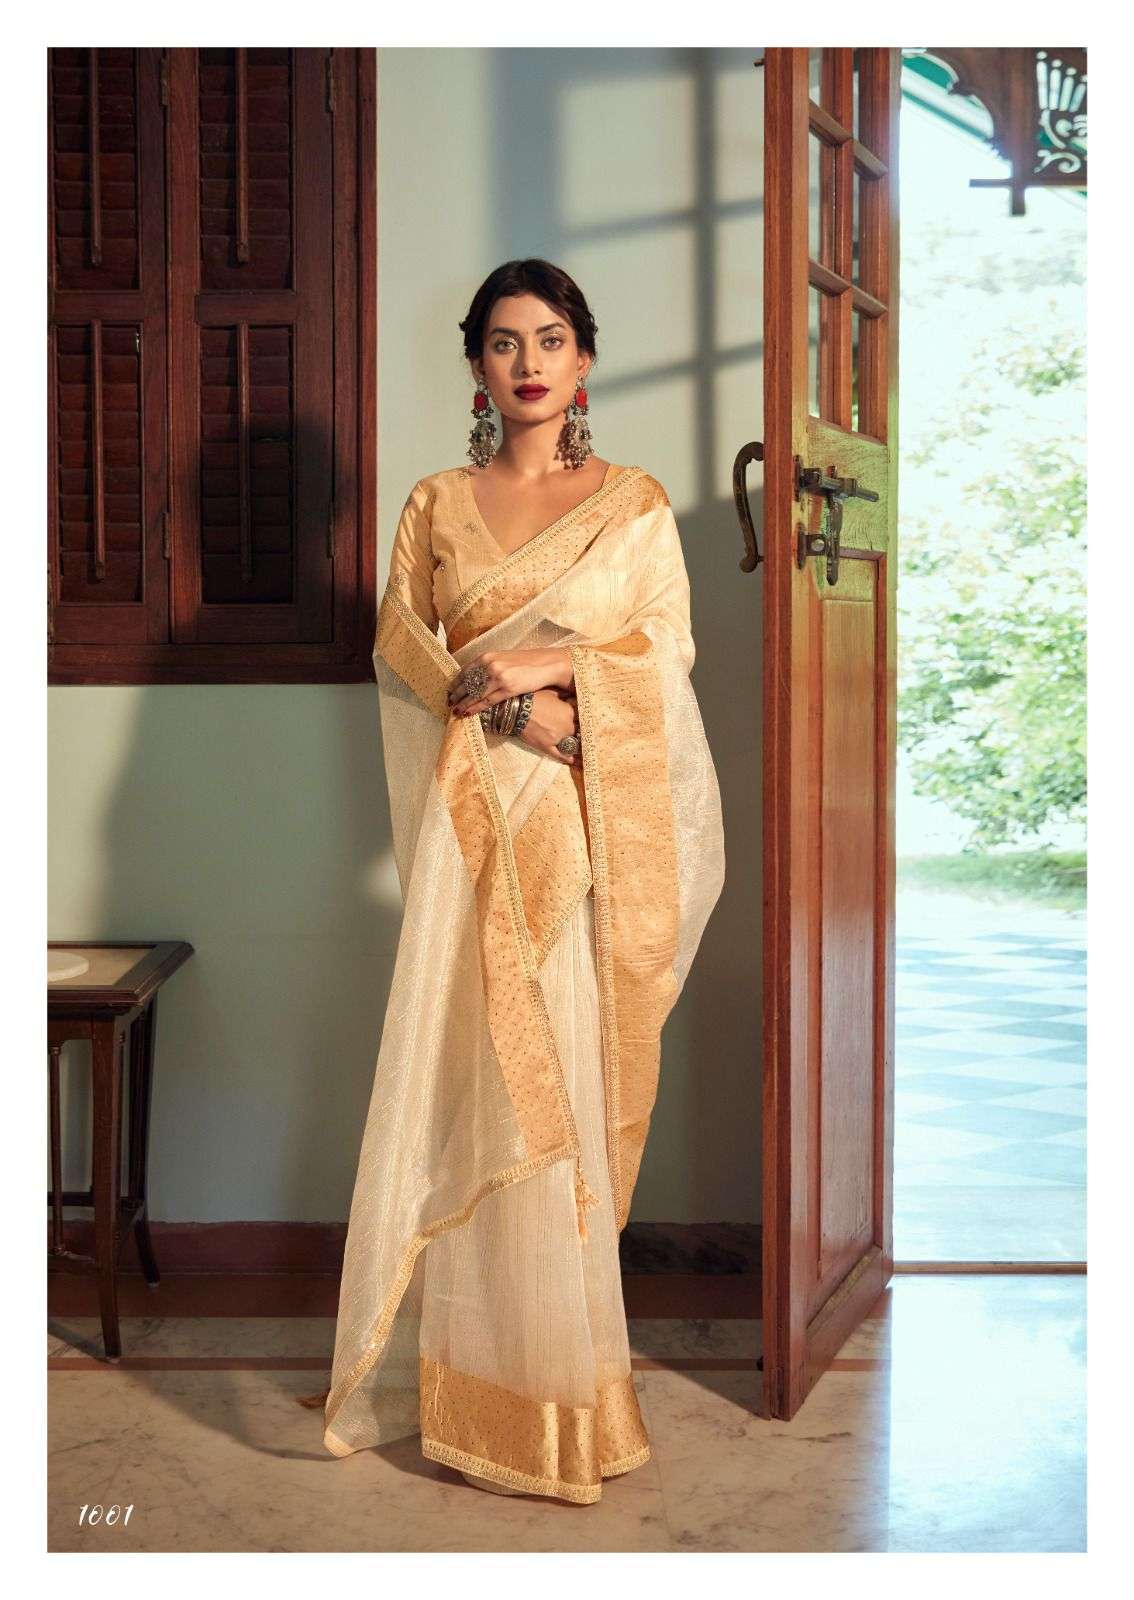 kashvi creation sangam 1001-1008 series party wear designer saree catalogue manufacturer surat